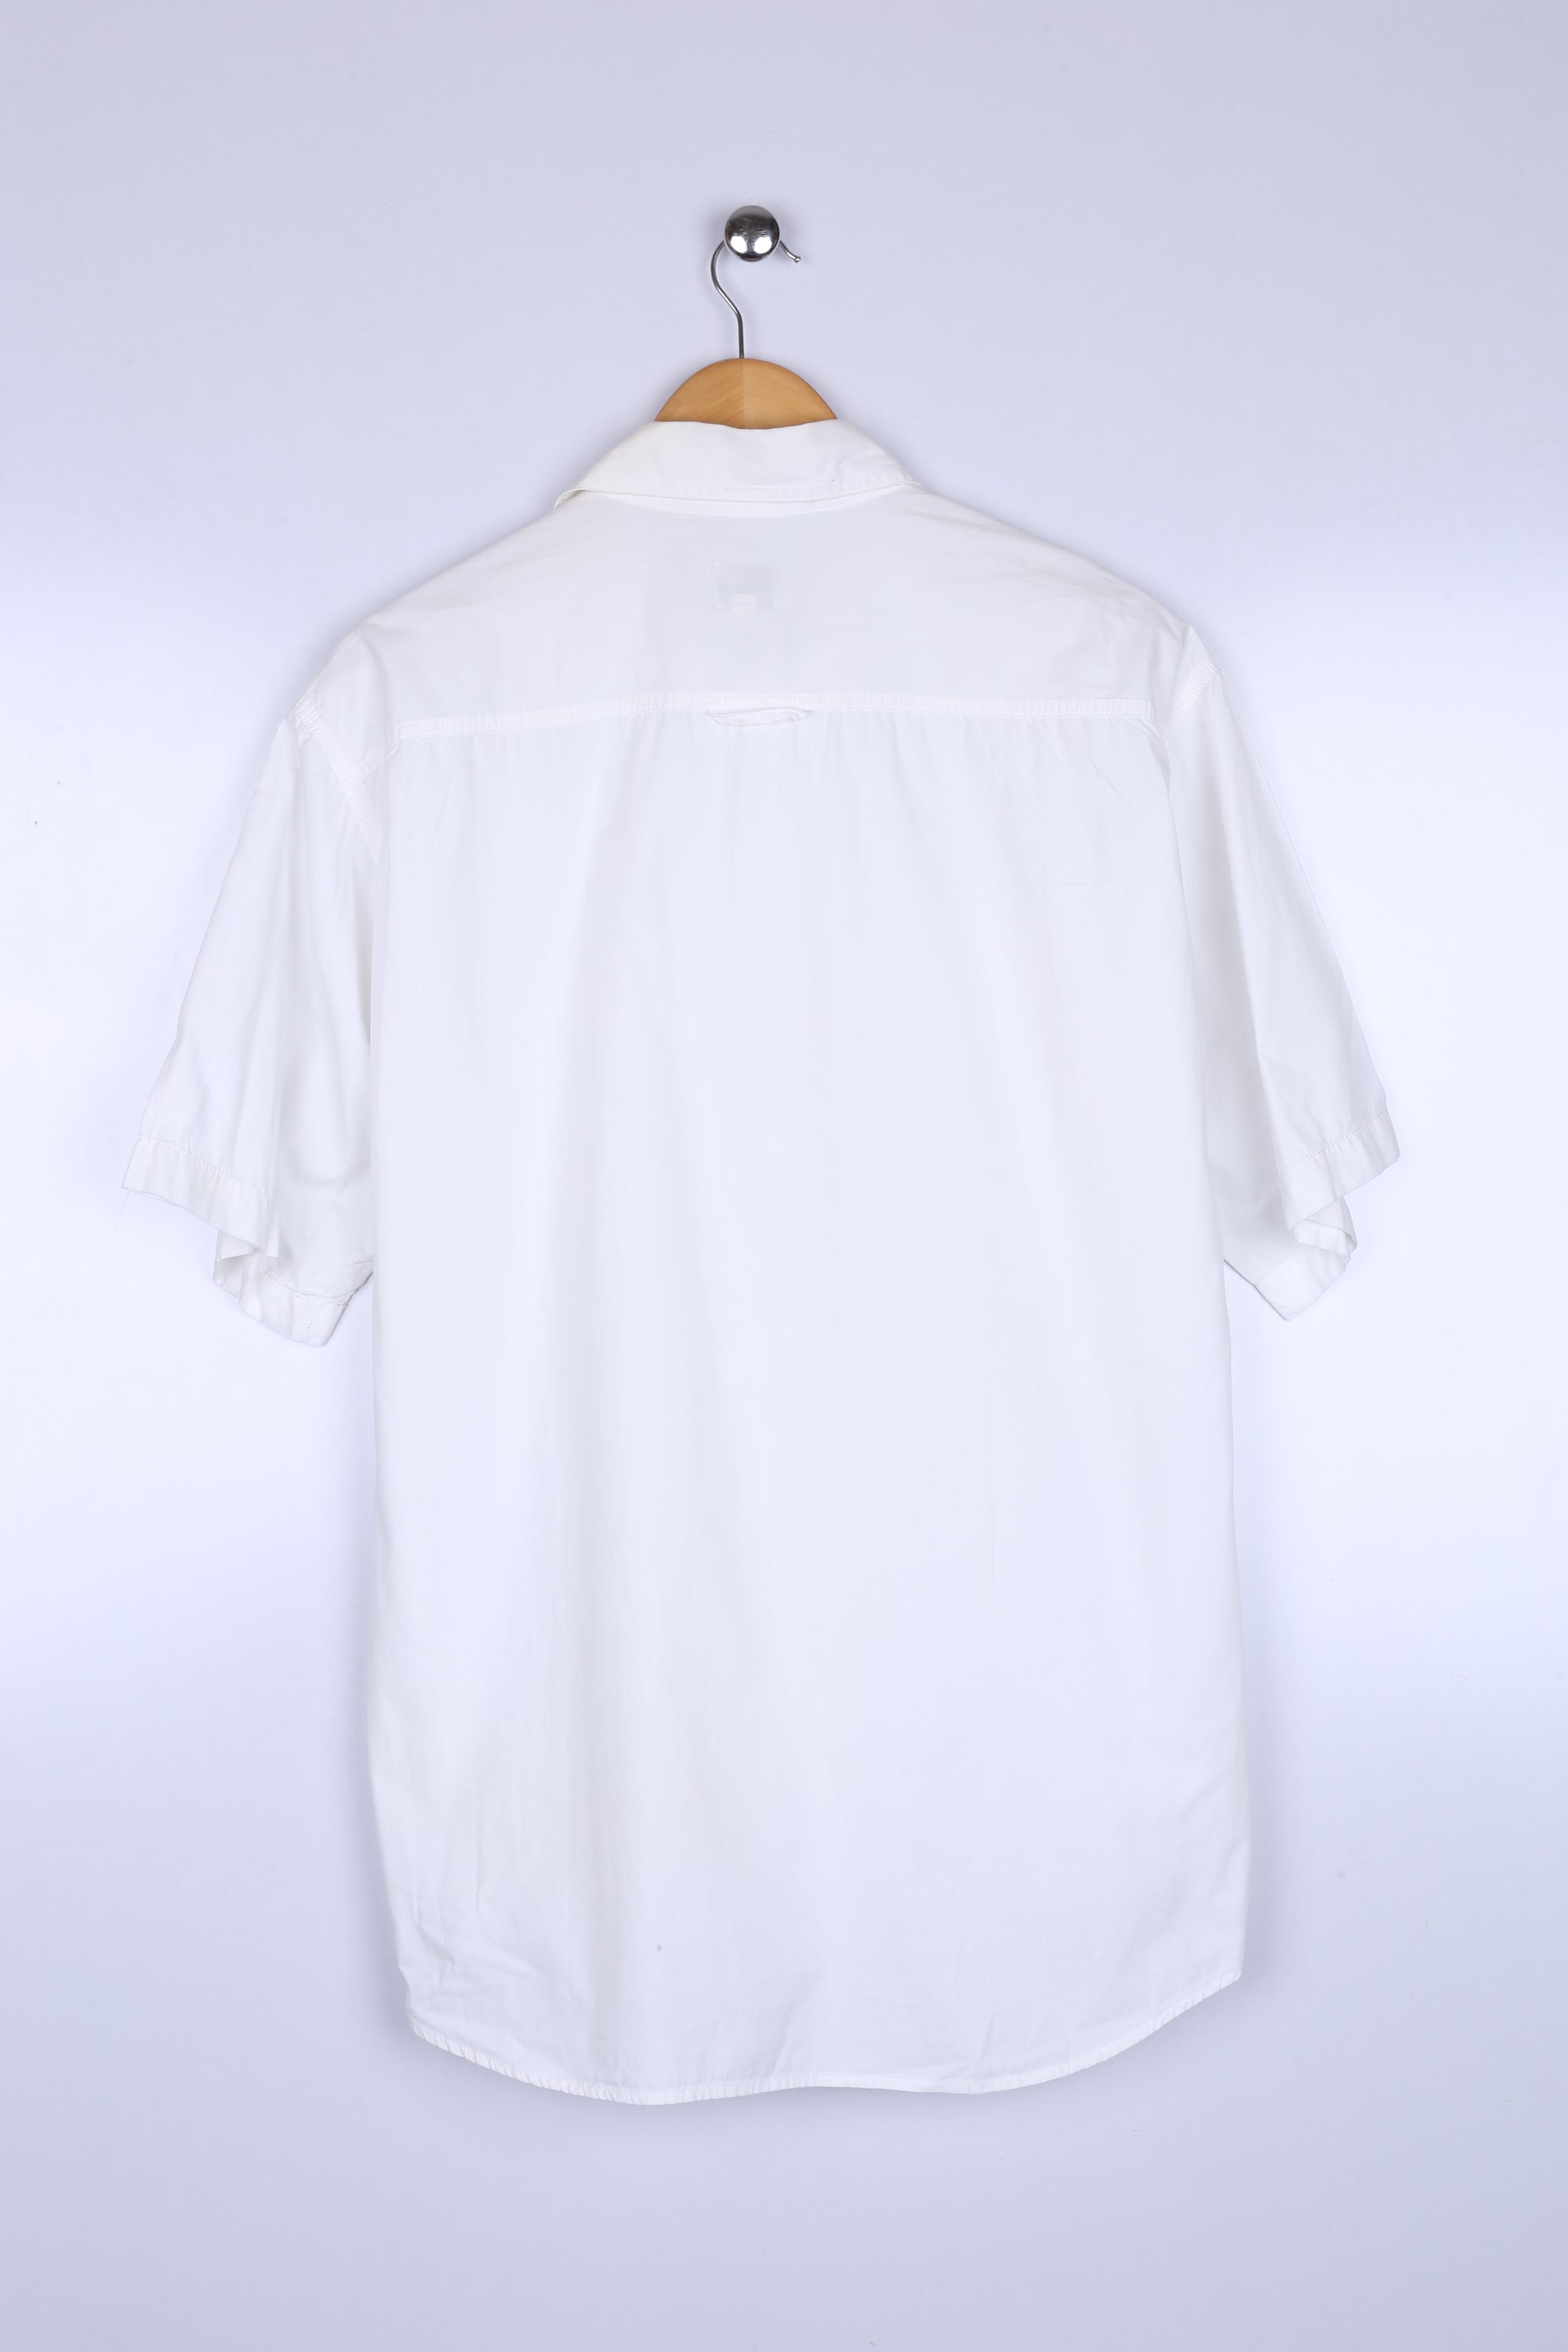 Vintage 90's Levis Half Sleeve Shirt White